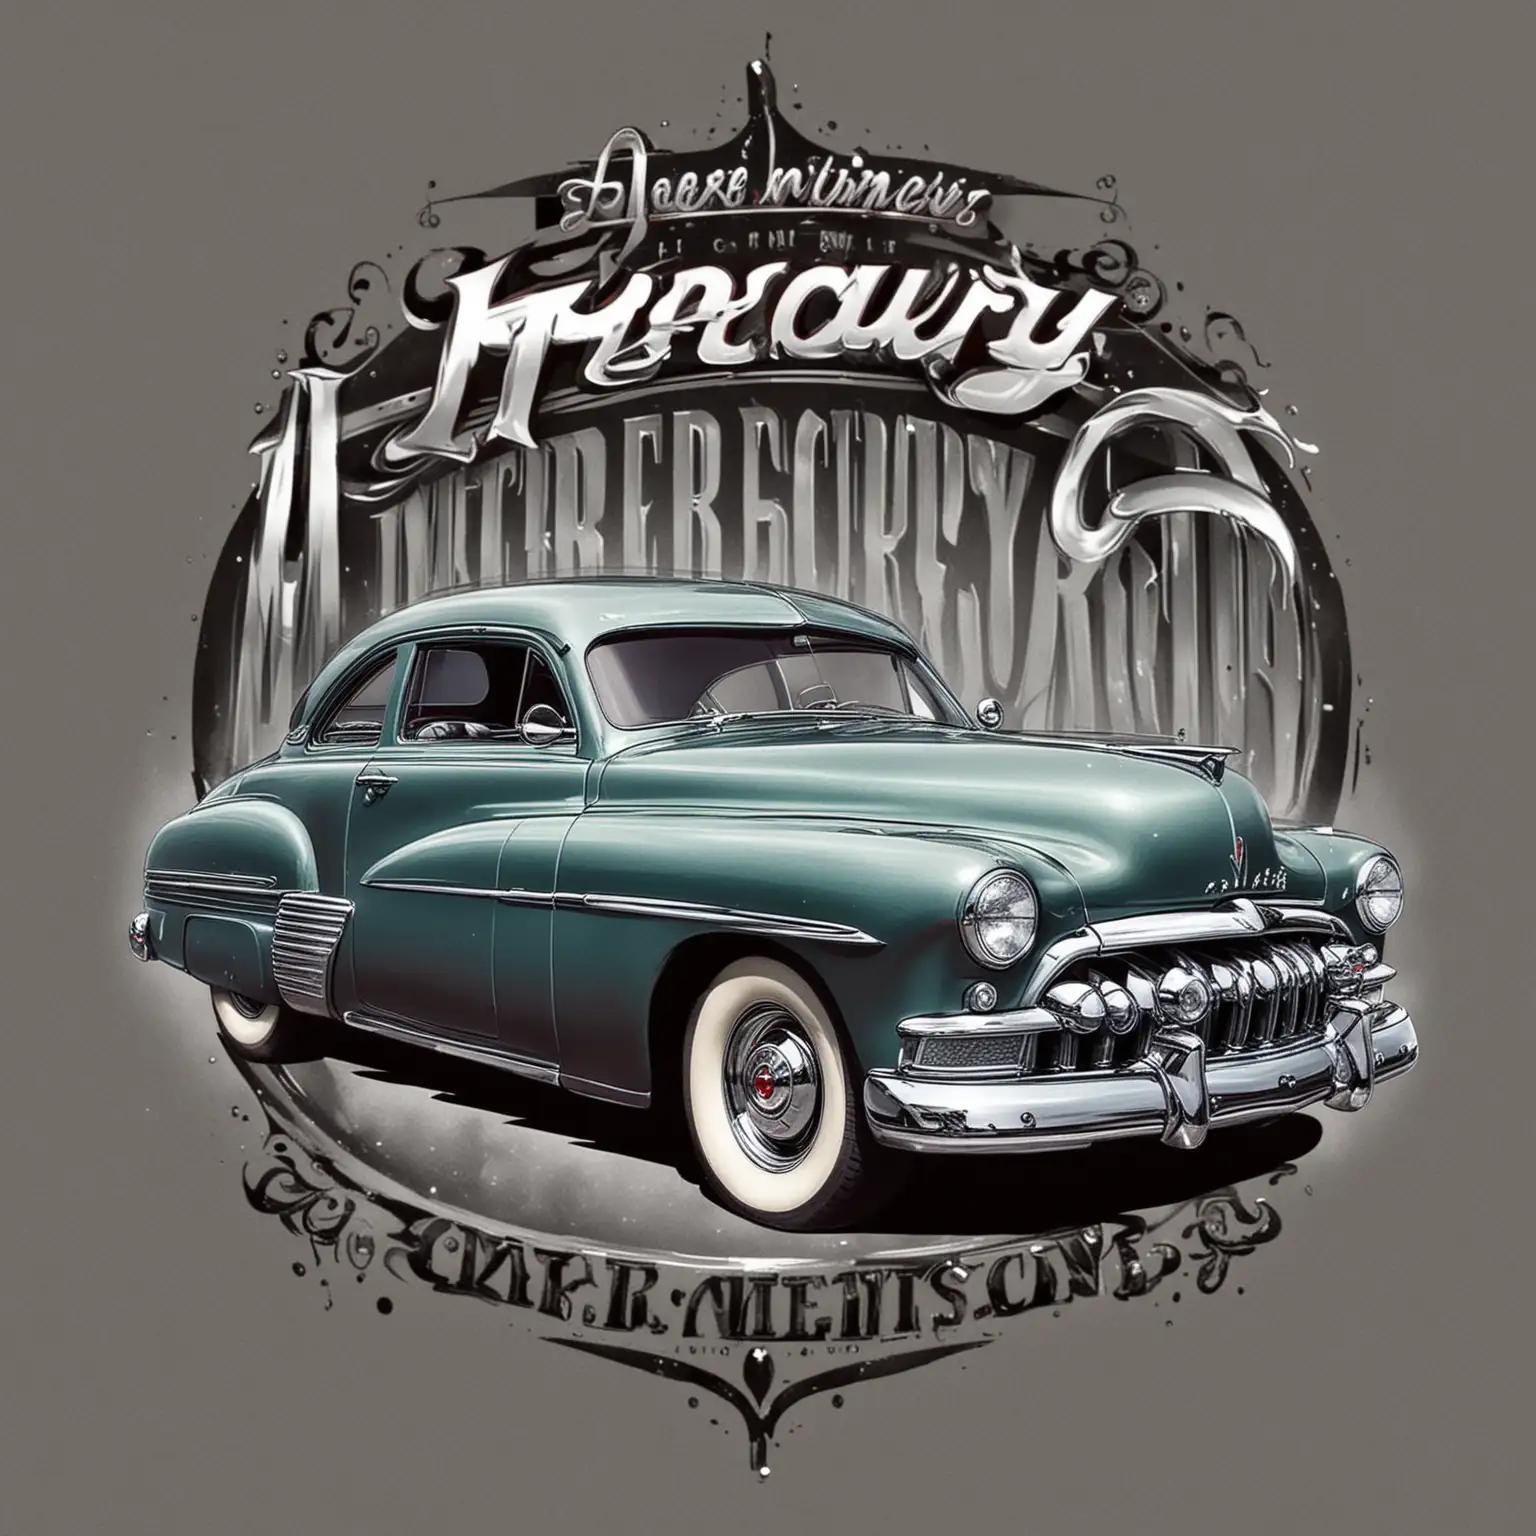 1950 mercury street rod Car Show T-shirt Design